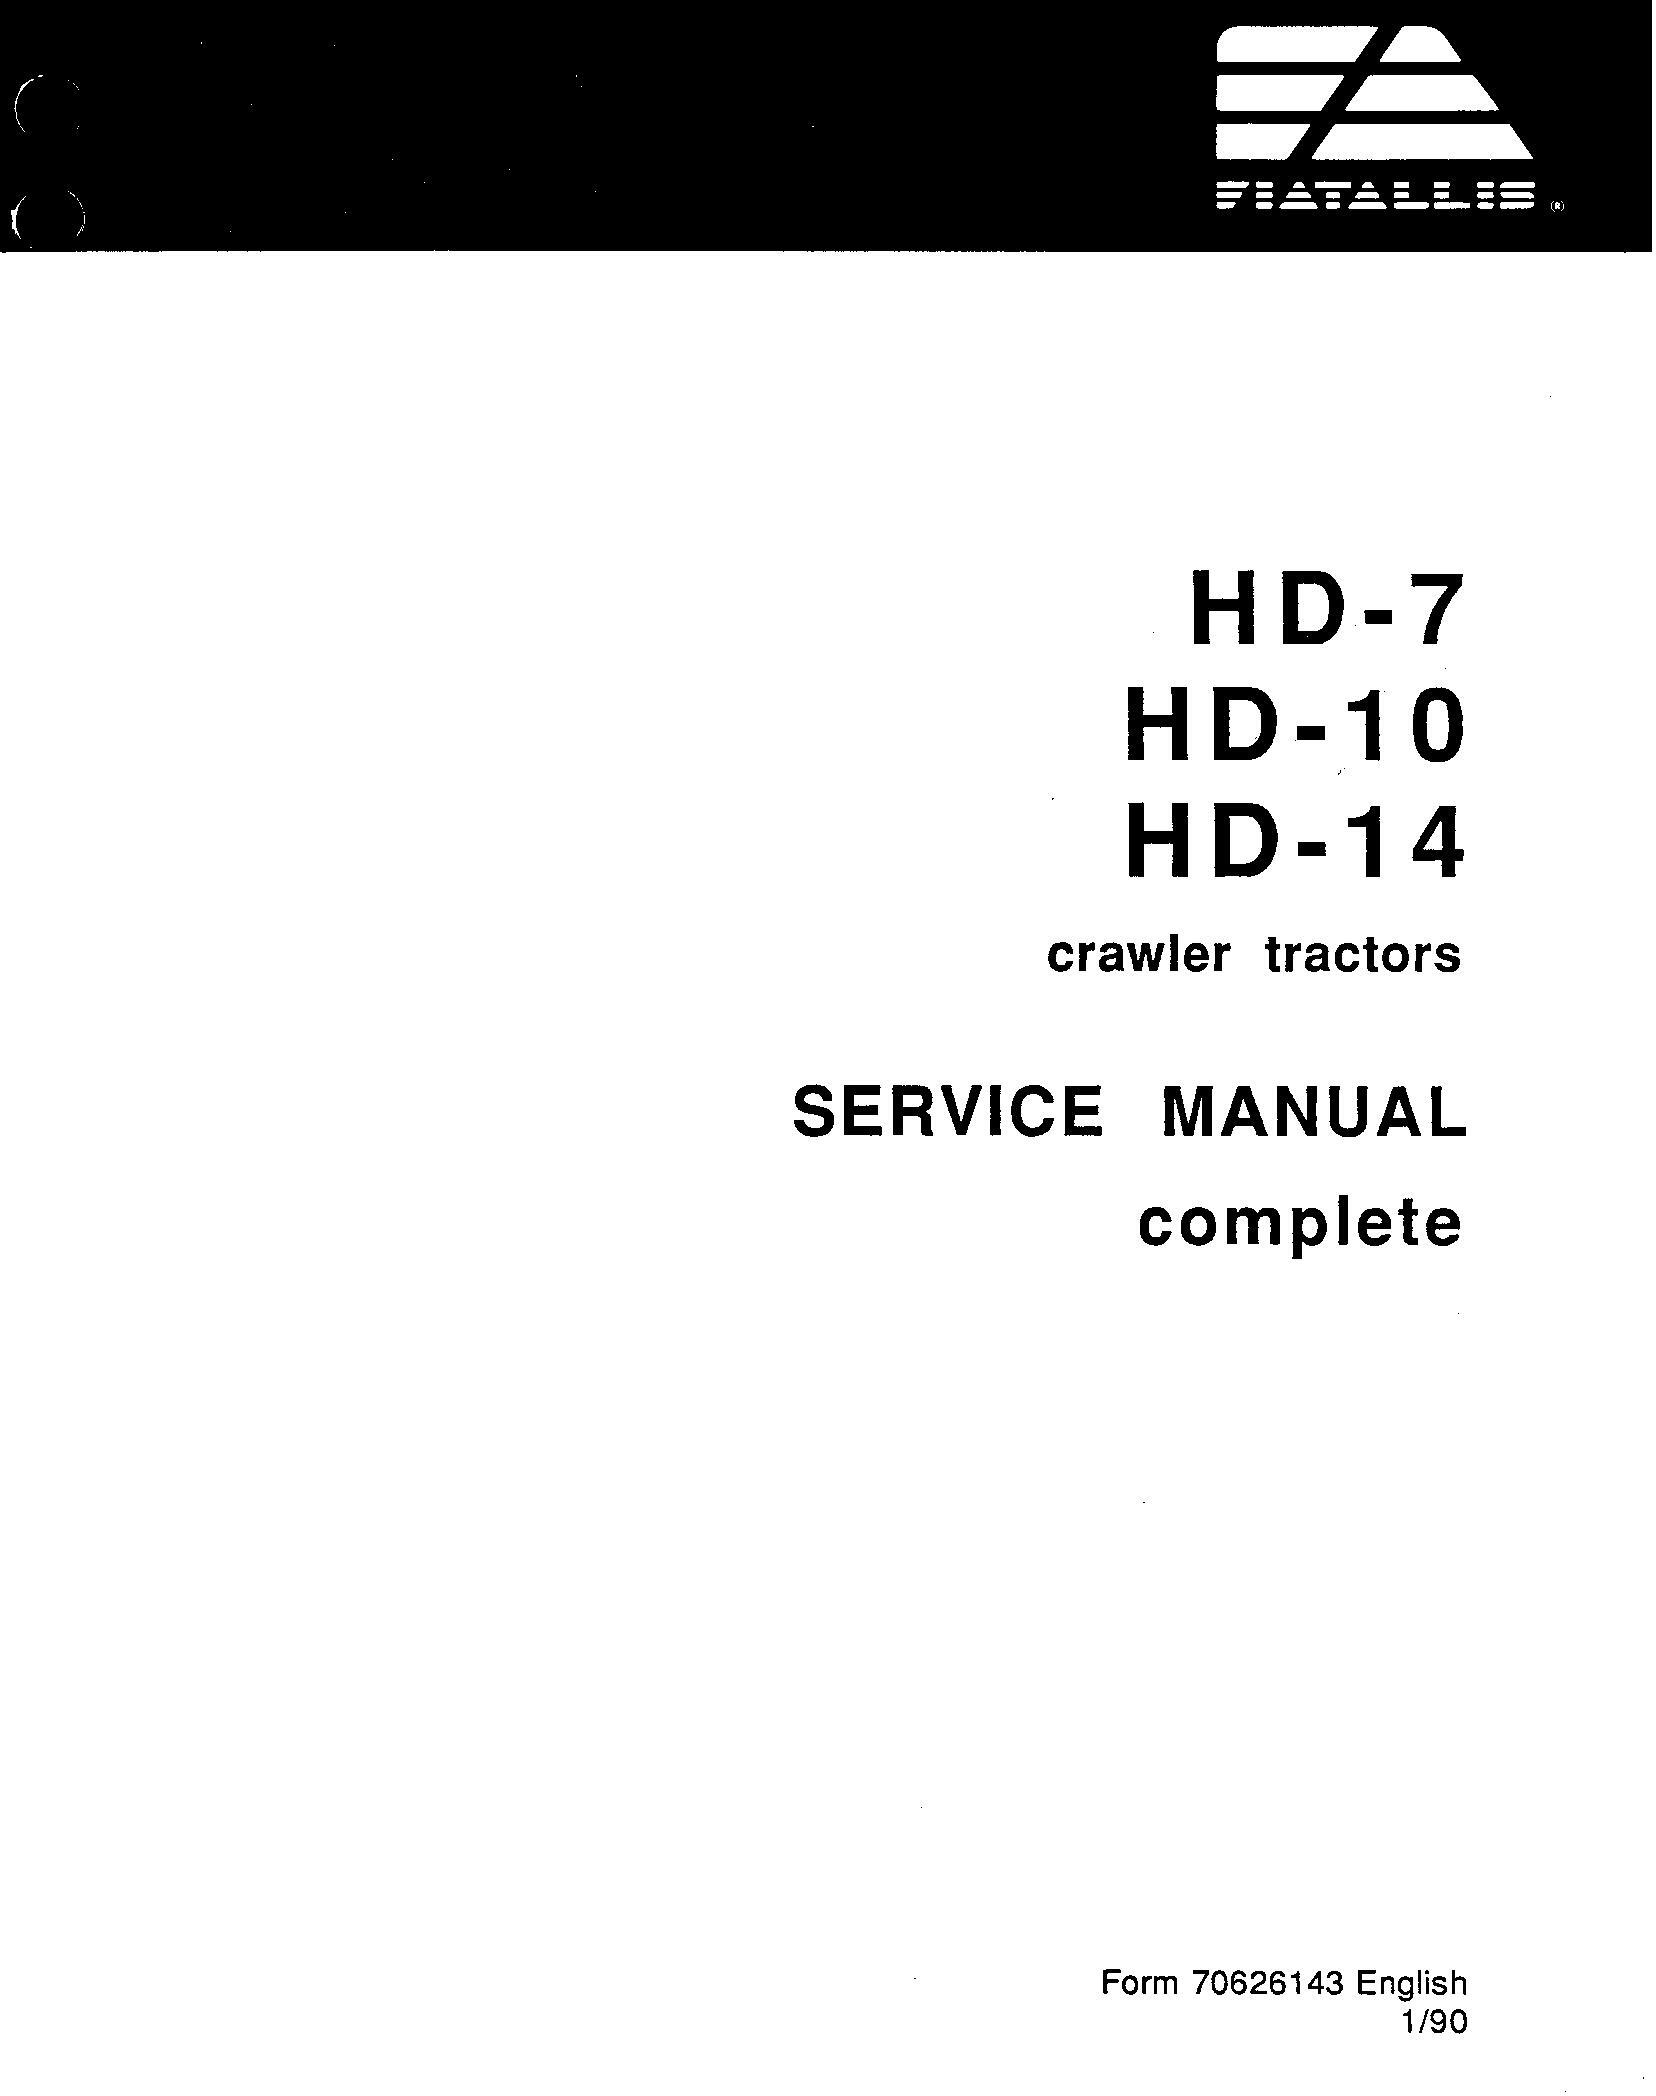 Fiat -Allis HD-7, HD-10, HD-14 Crawler Tractor Service Manual